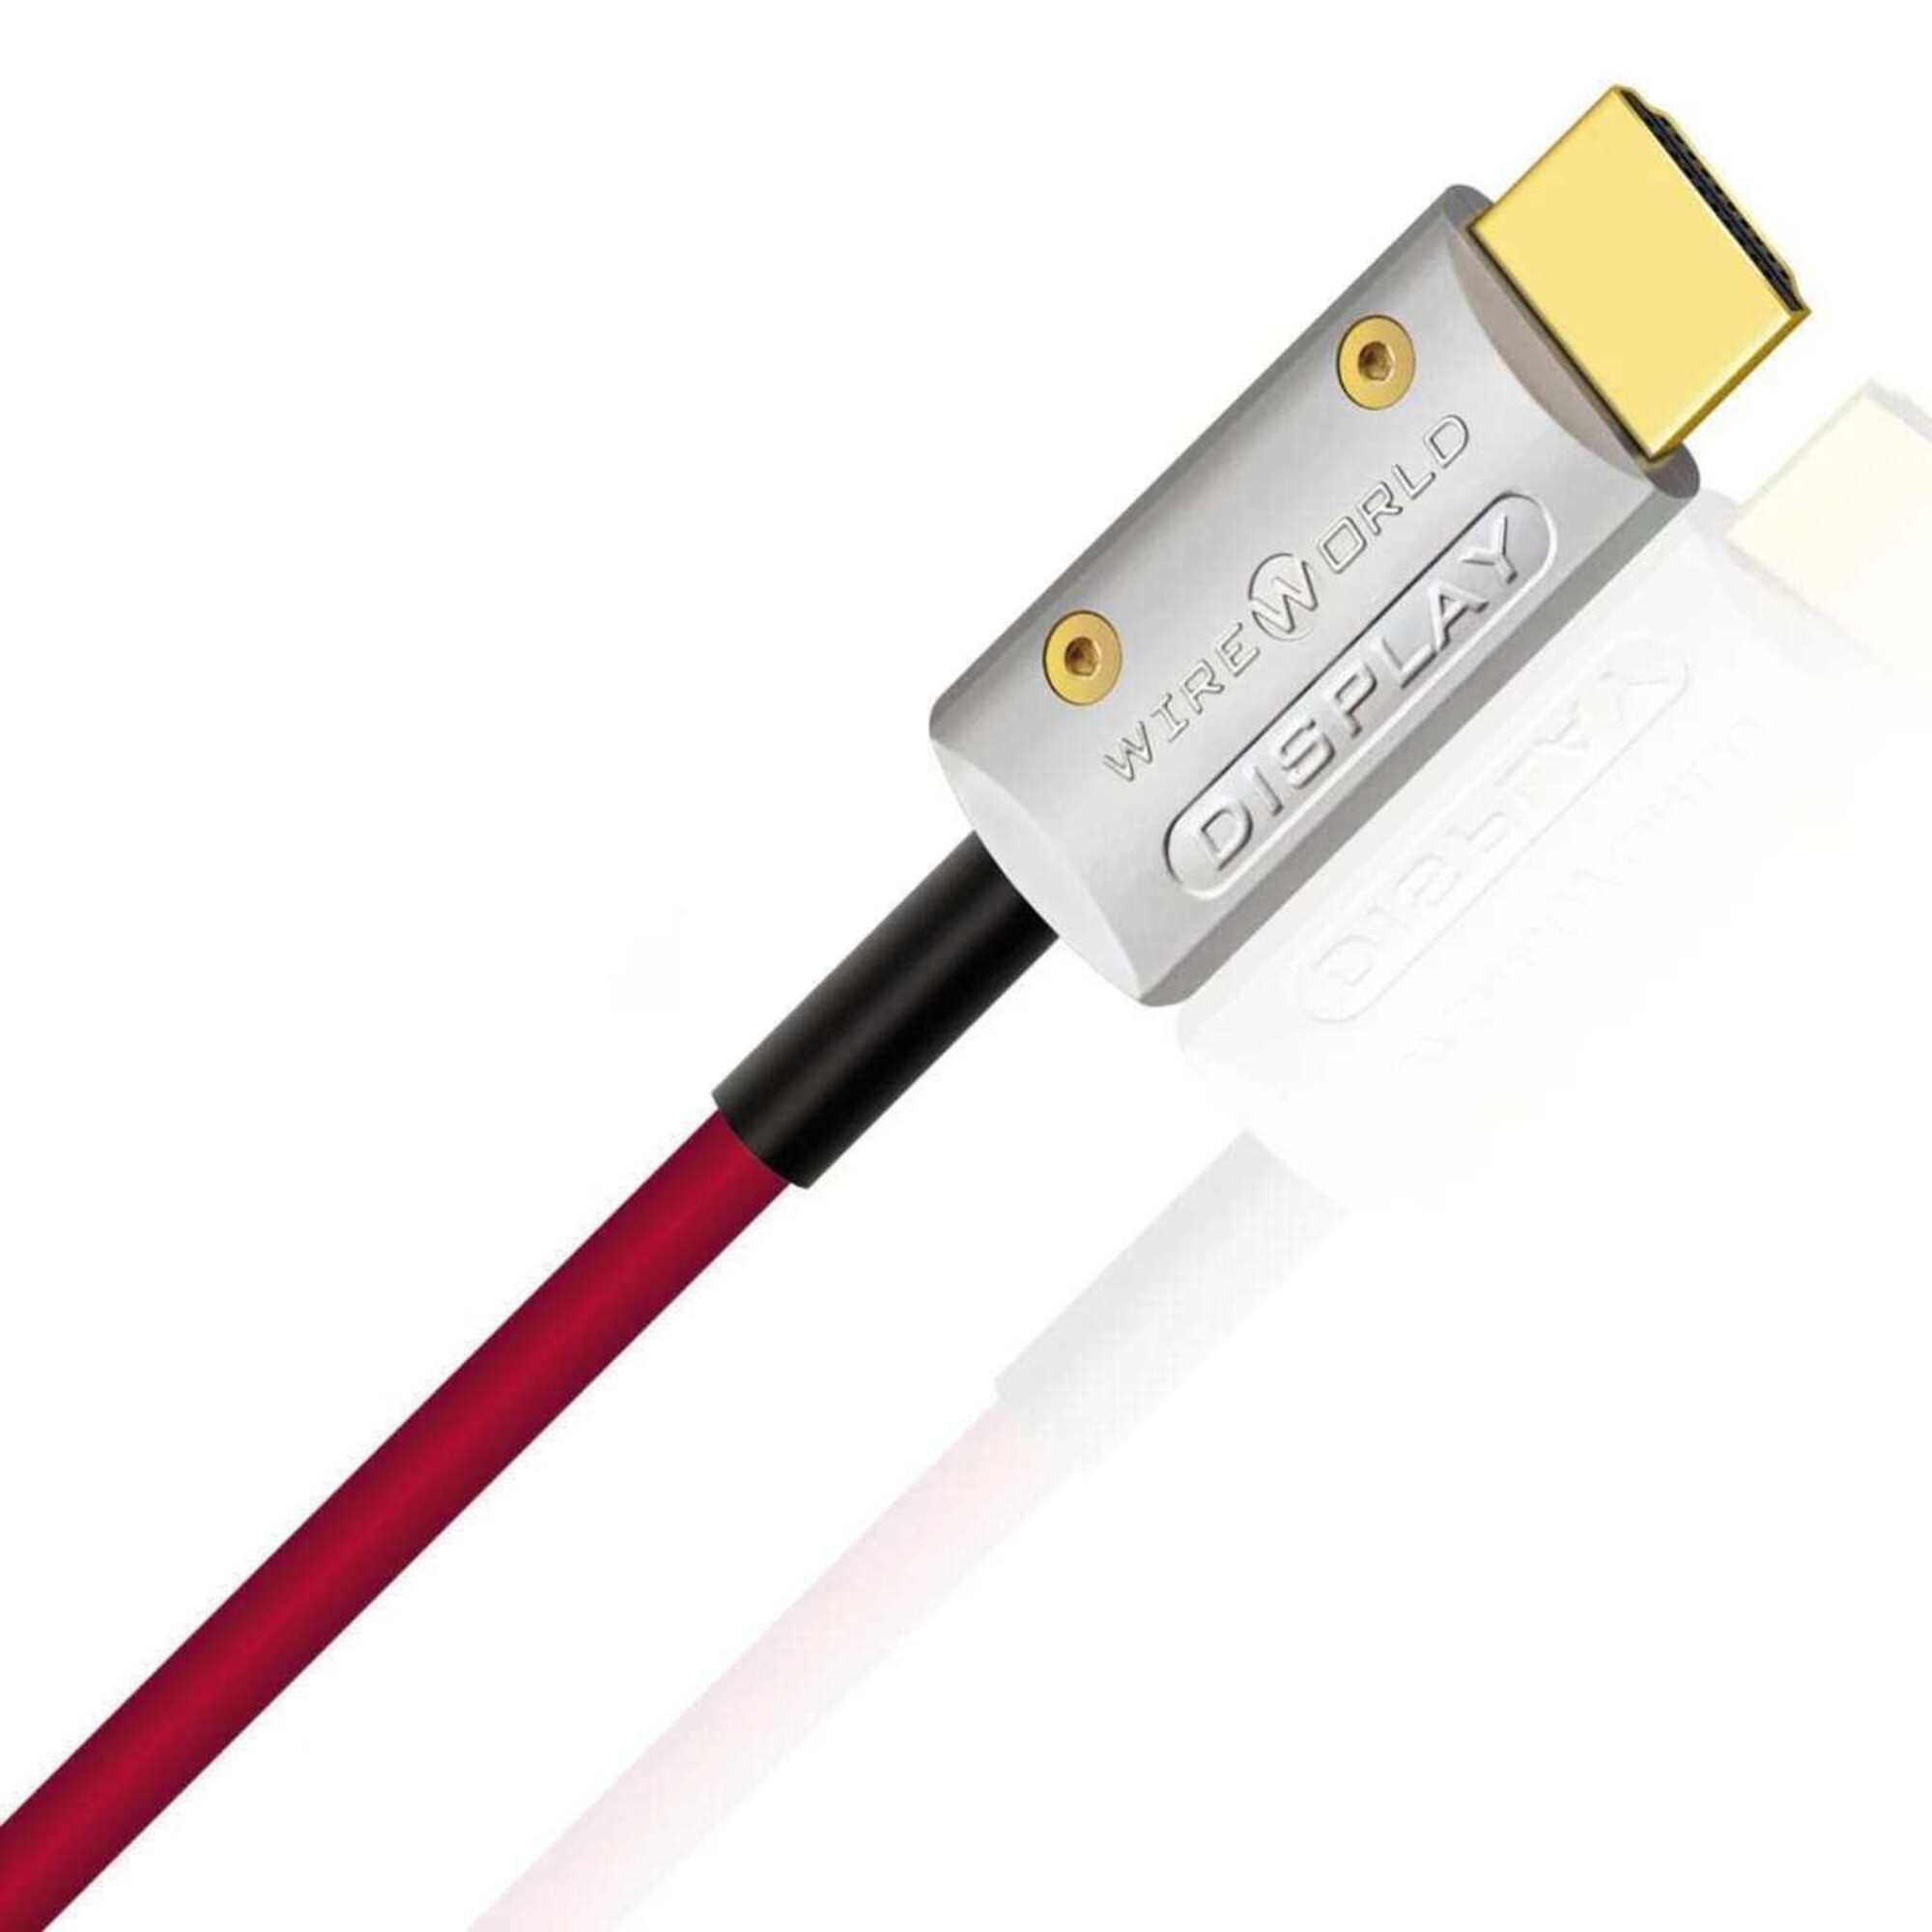 HDMI кабели Wire World Starlight HDMI - 48G/8K 5.0m пульт huayu для world vision wv t35 t55 t60m hvd0210